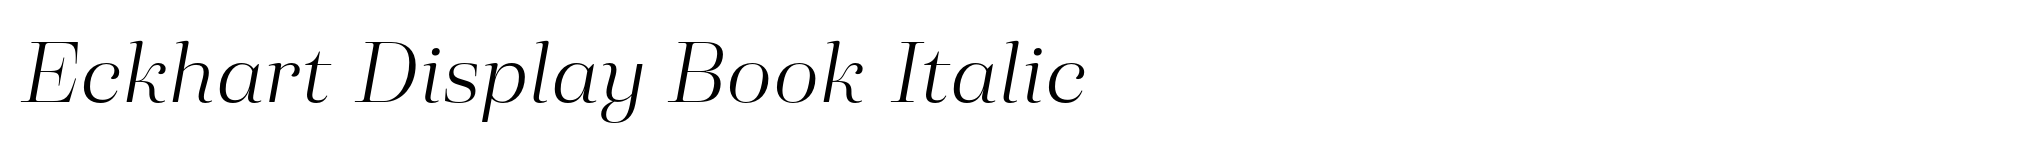 Eckhart Display Book Italic image